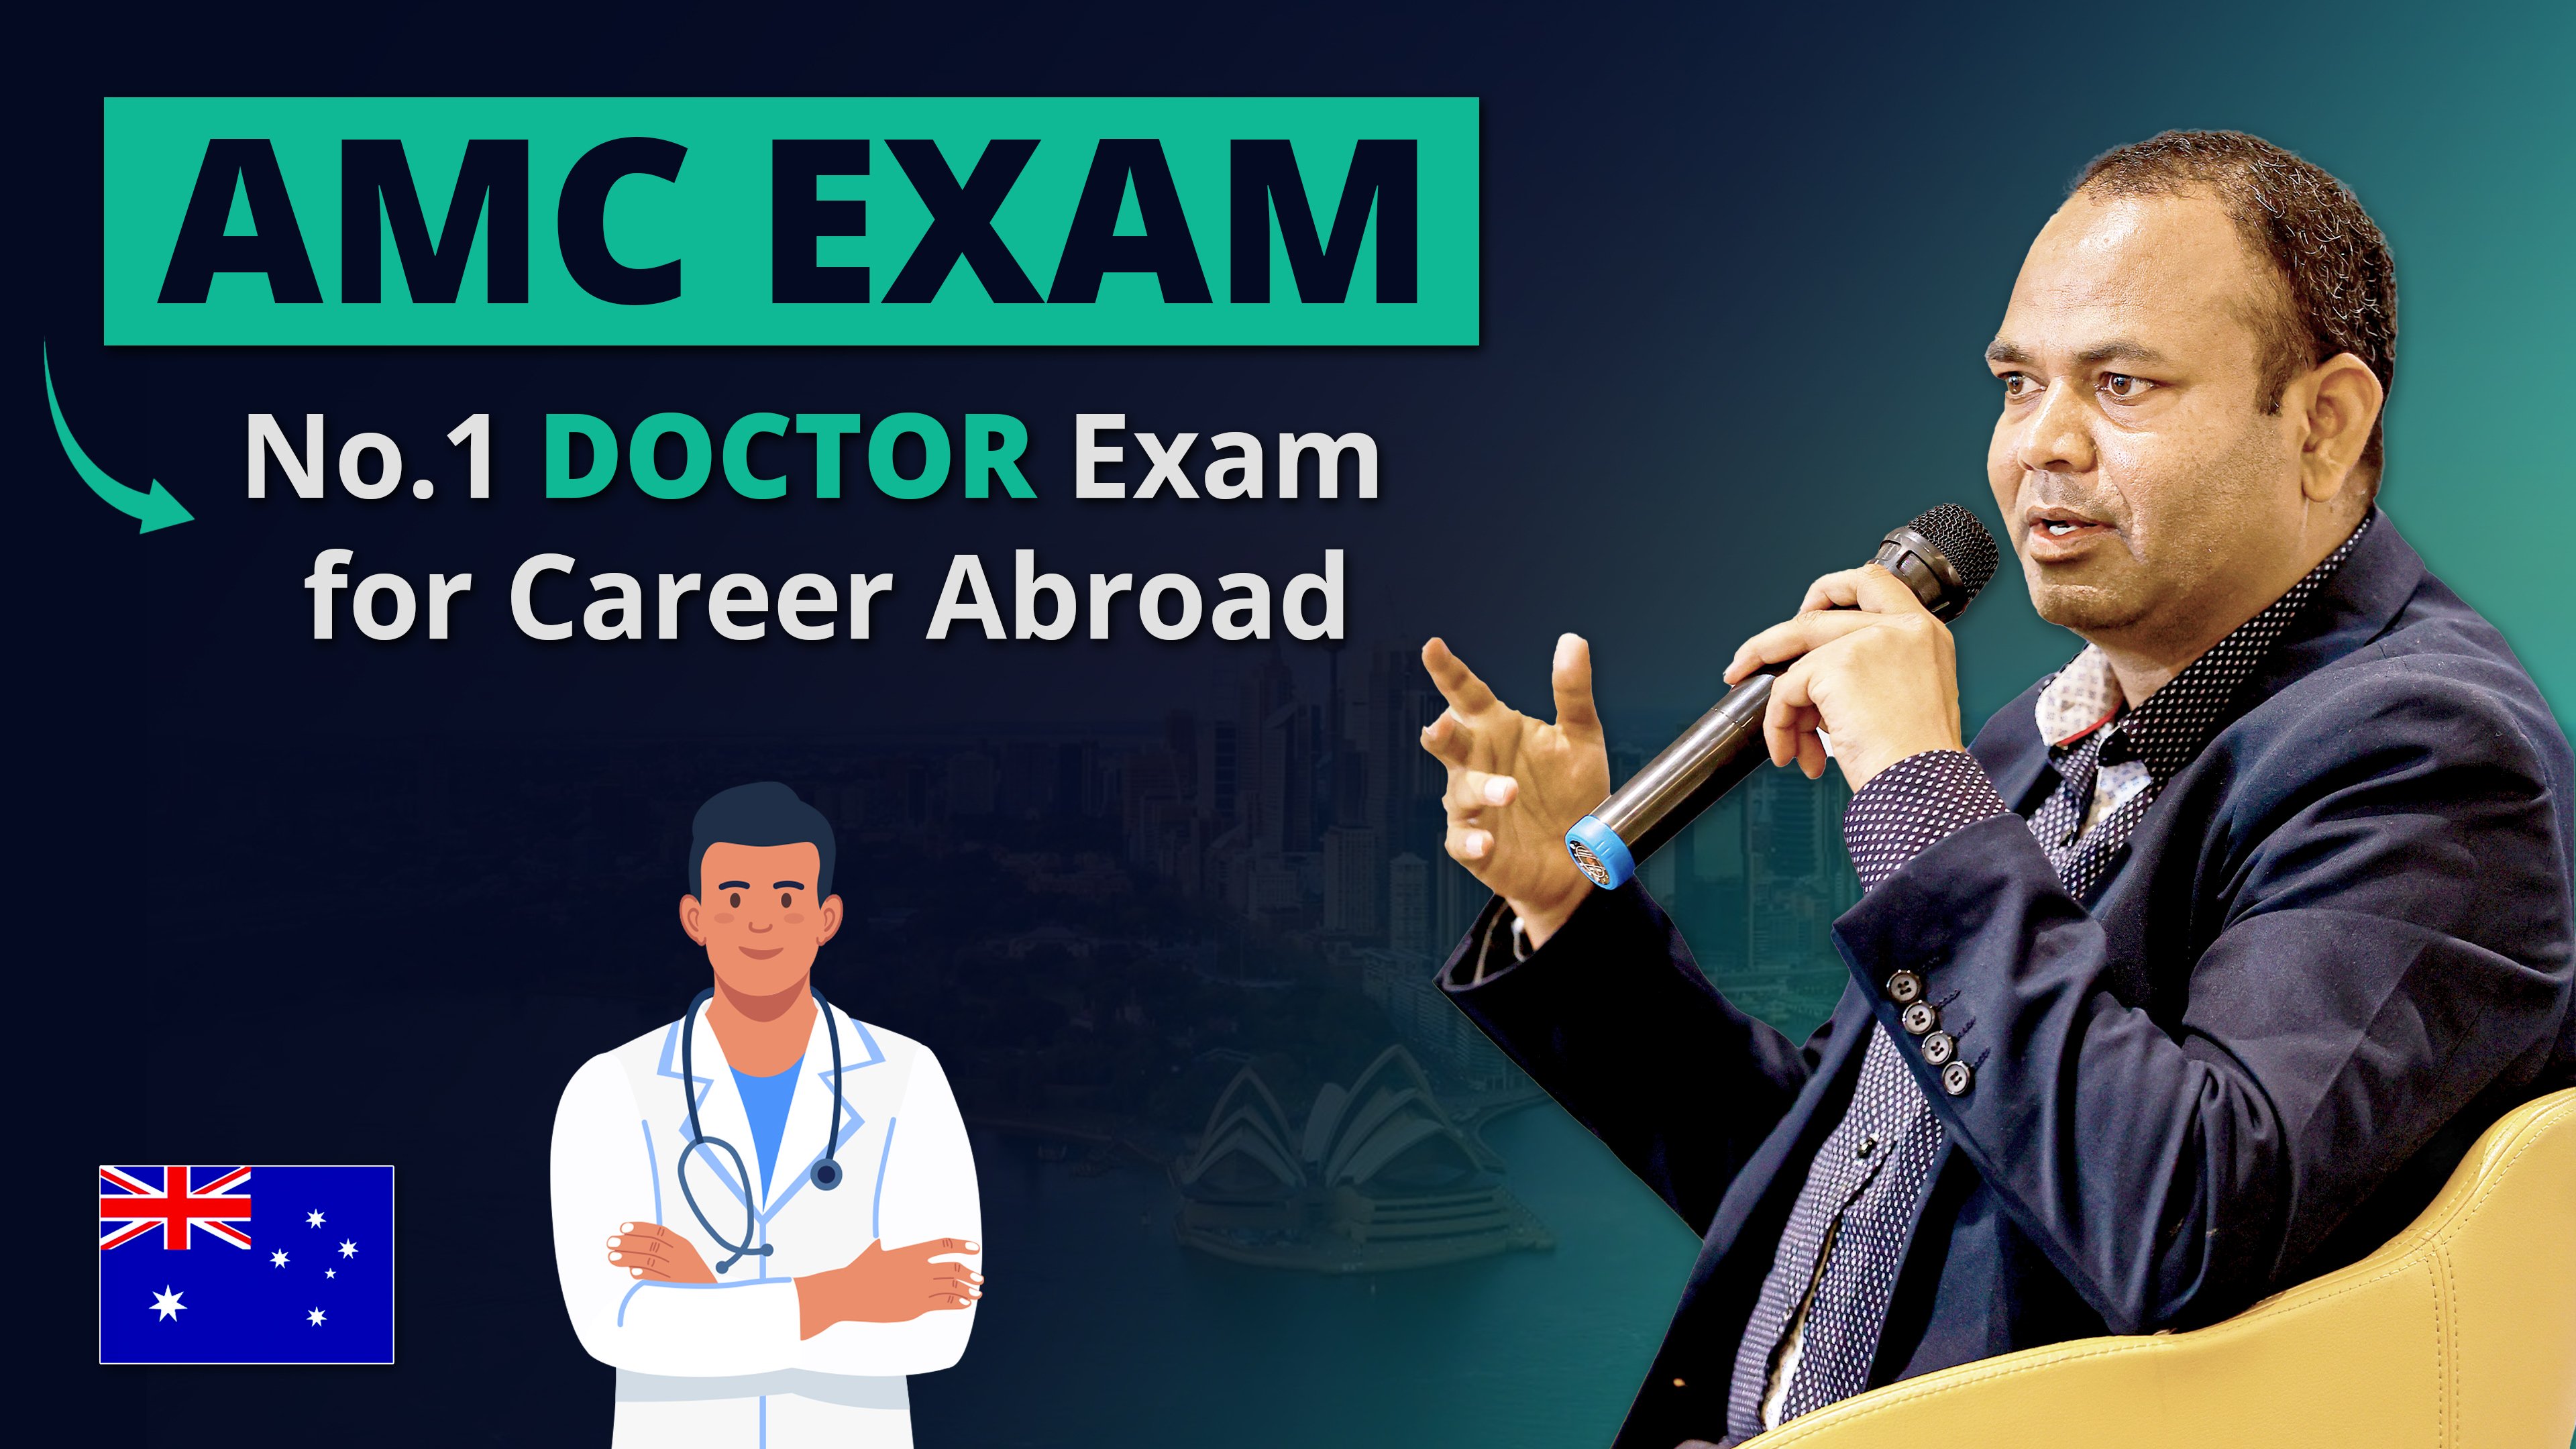 AMC Exam Preparation Course